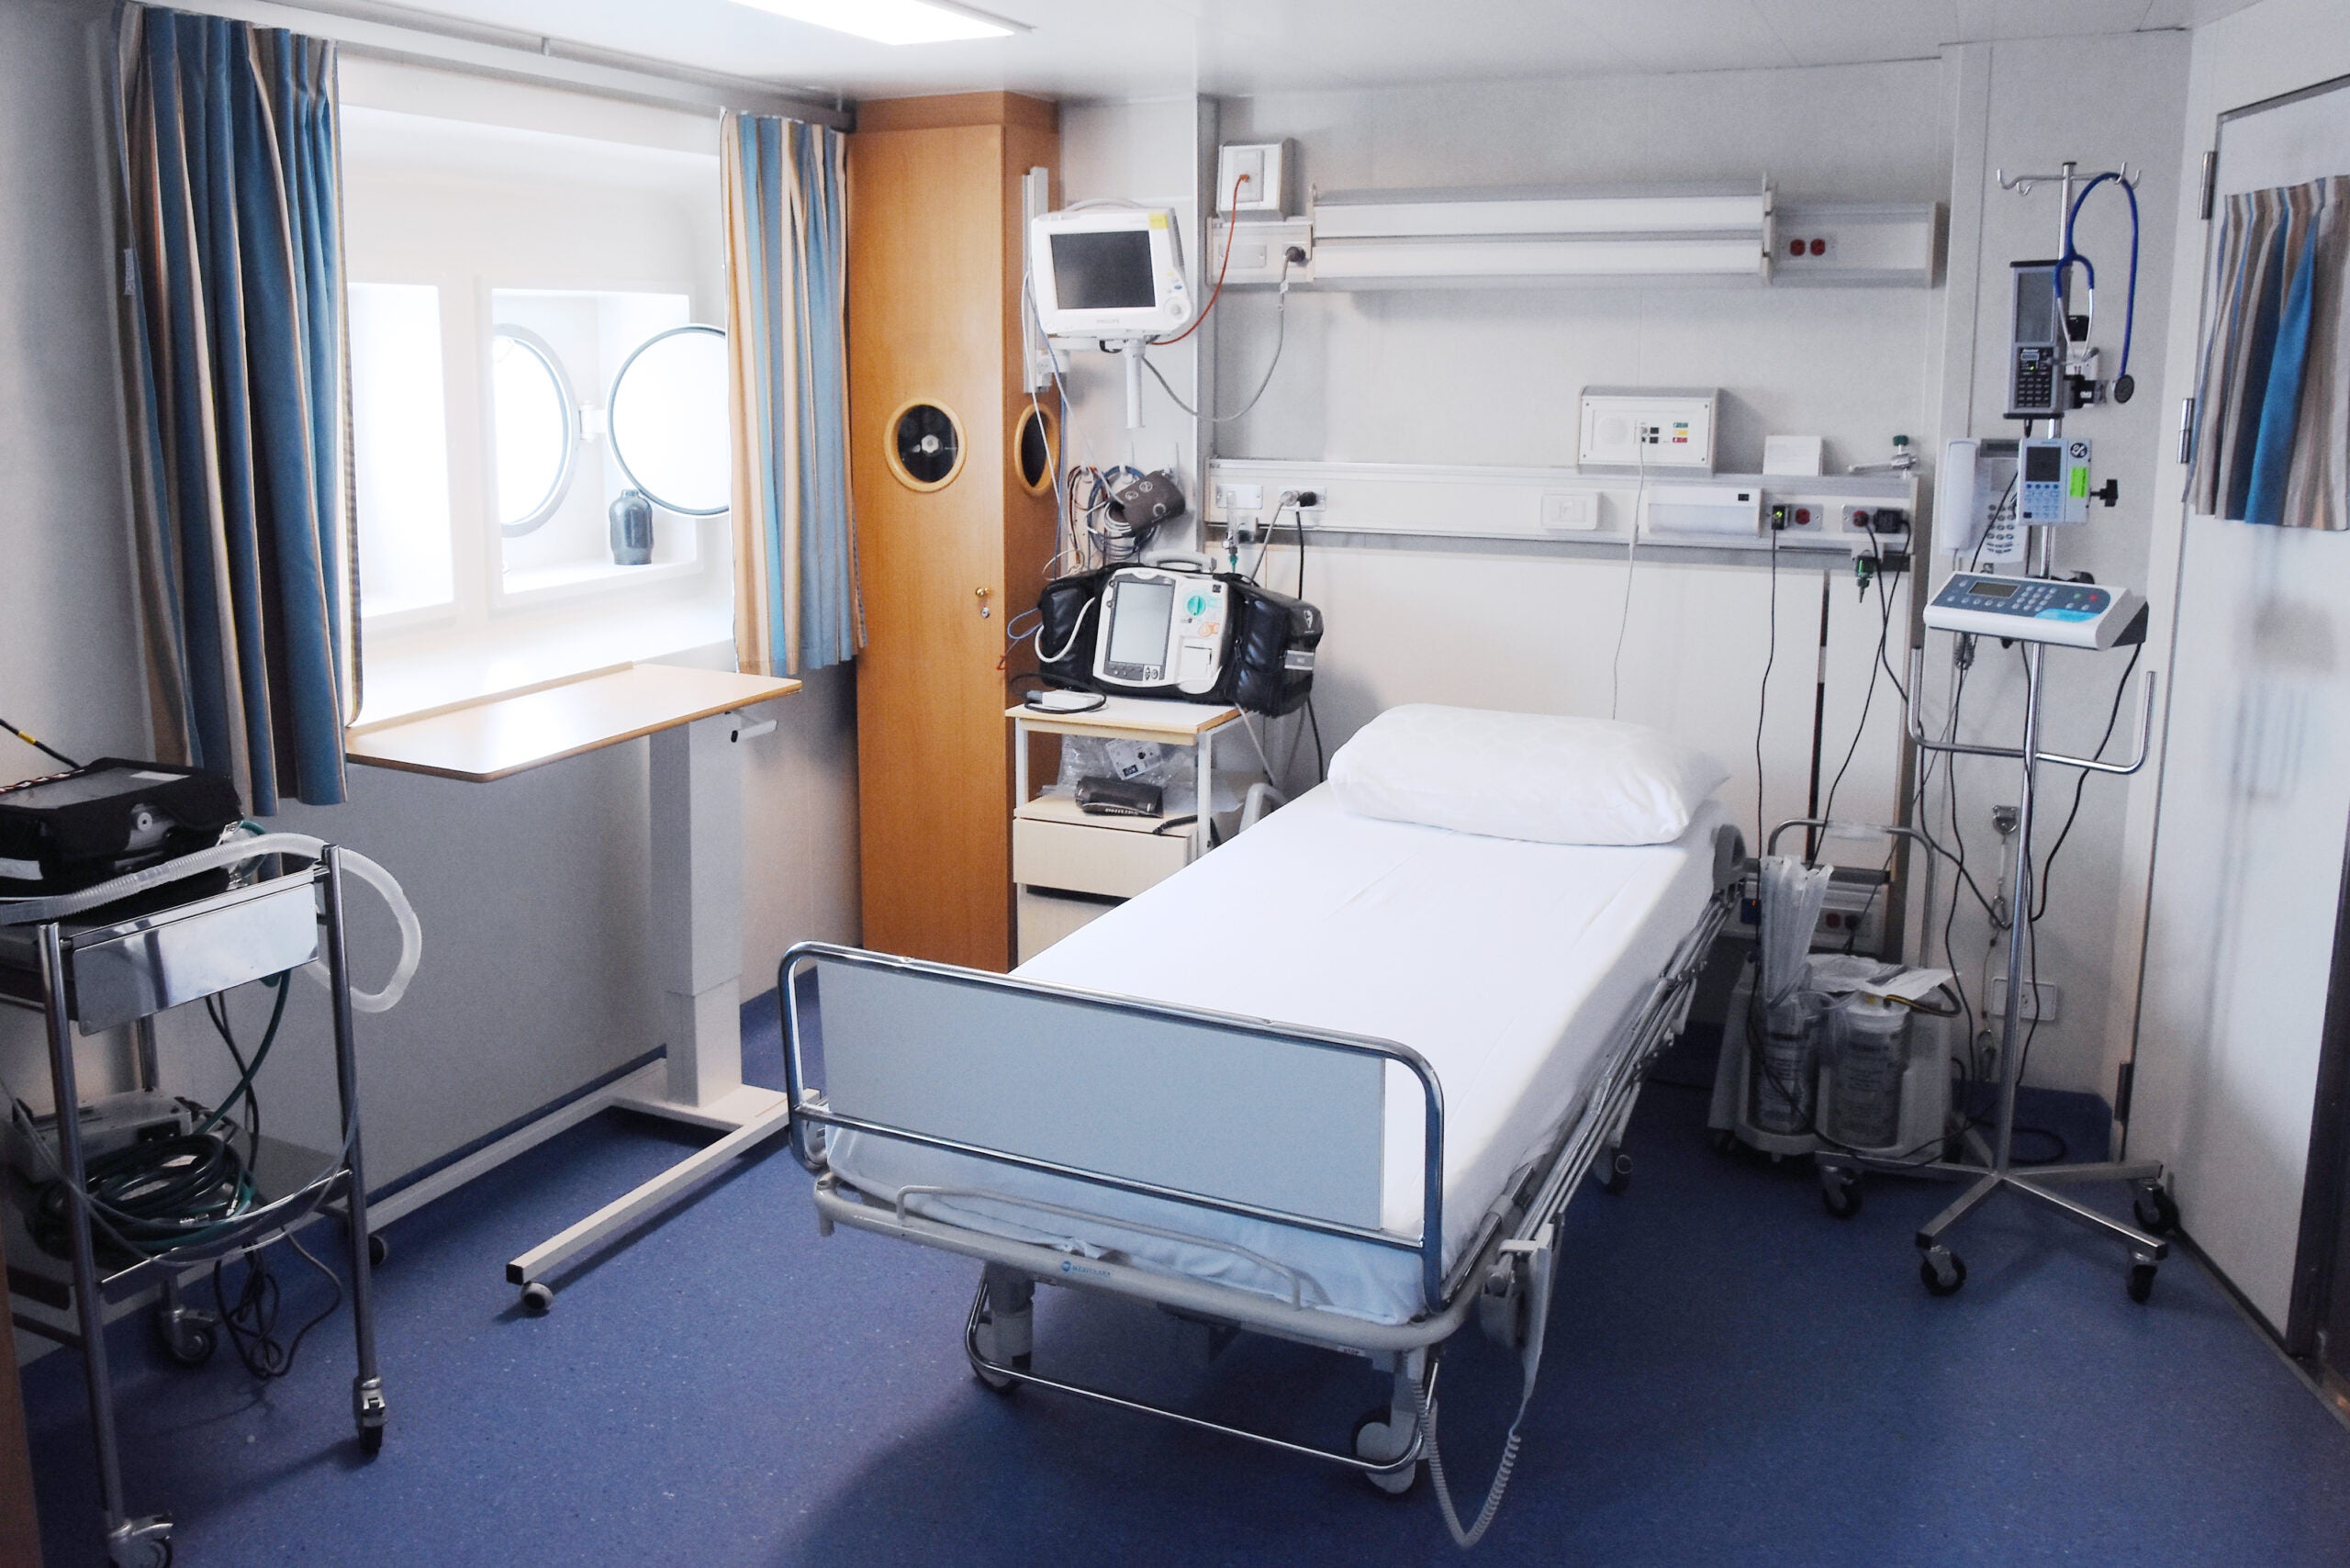 doctor on board cruise ship